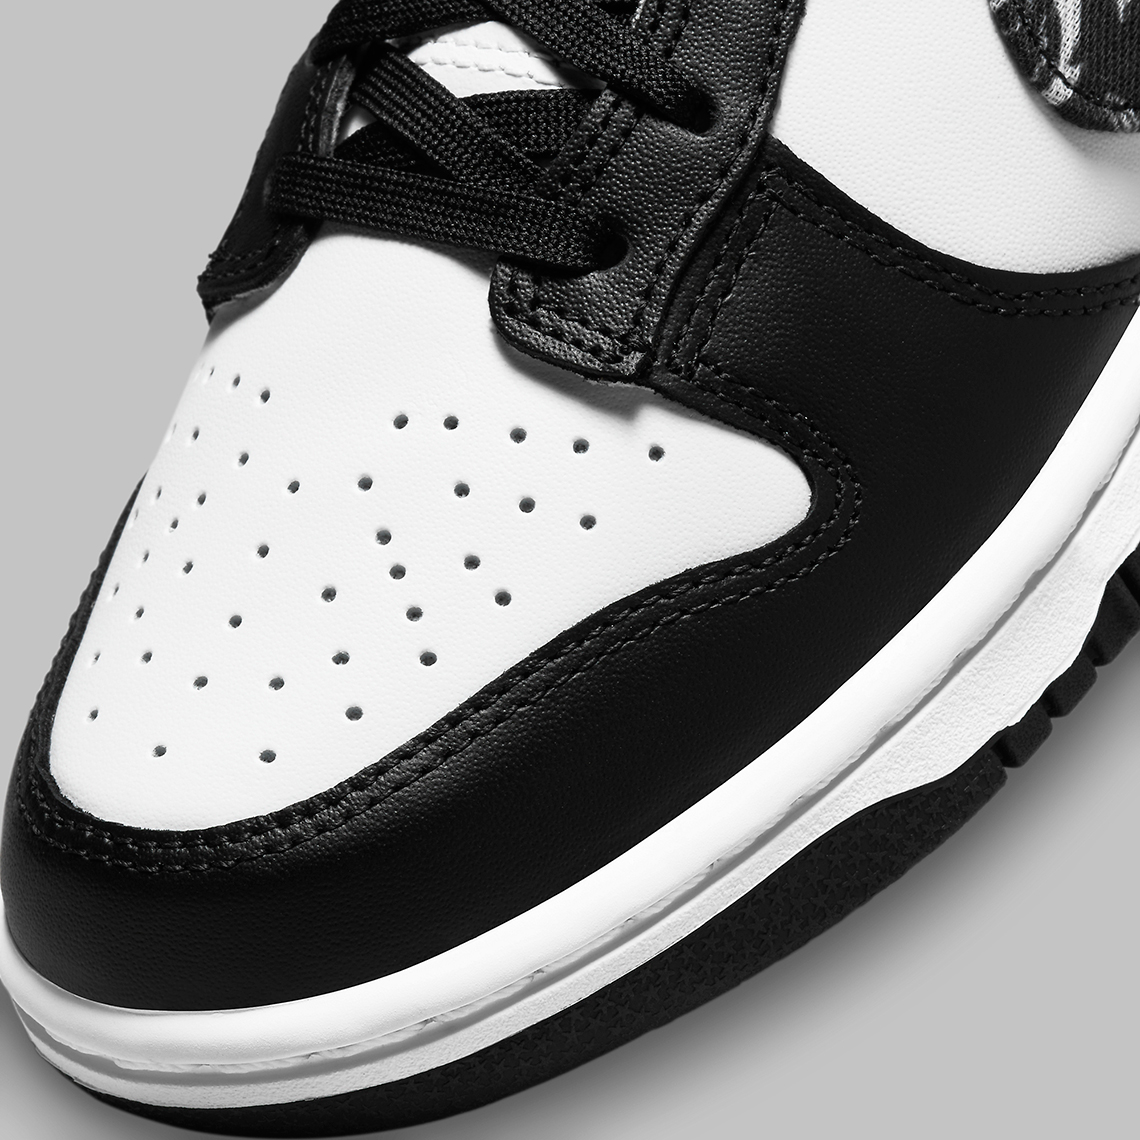 nike air marauders shoes online Black White Paisley Panda Dh4401 100 5